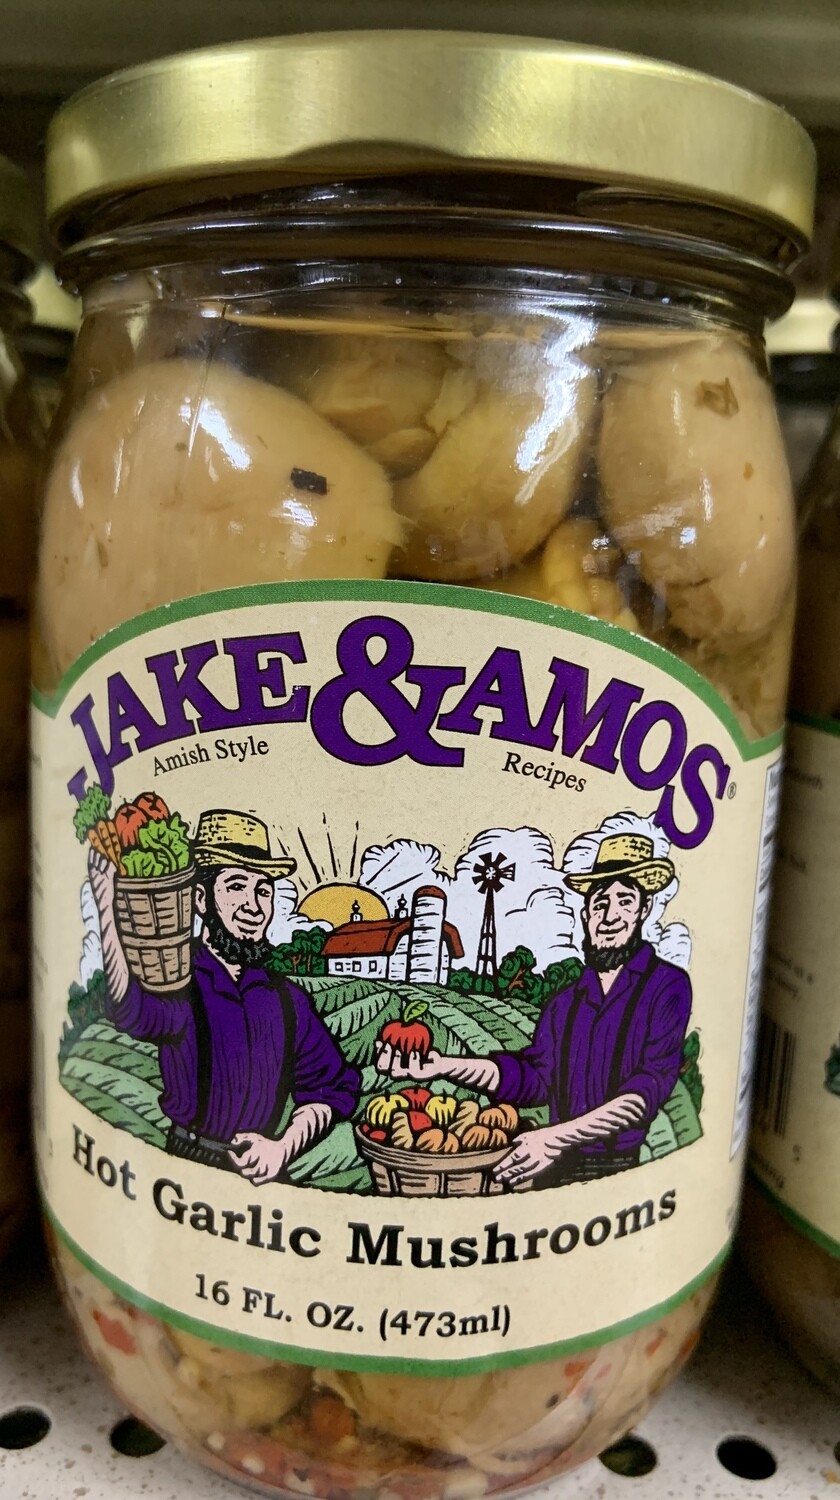 Jake & Amos Hot Garlic Mushroom 16 oz